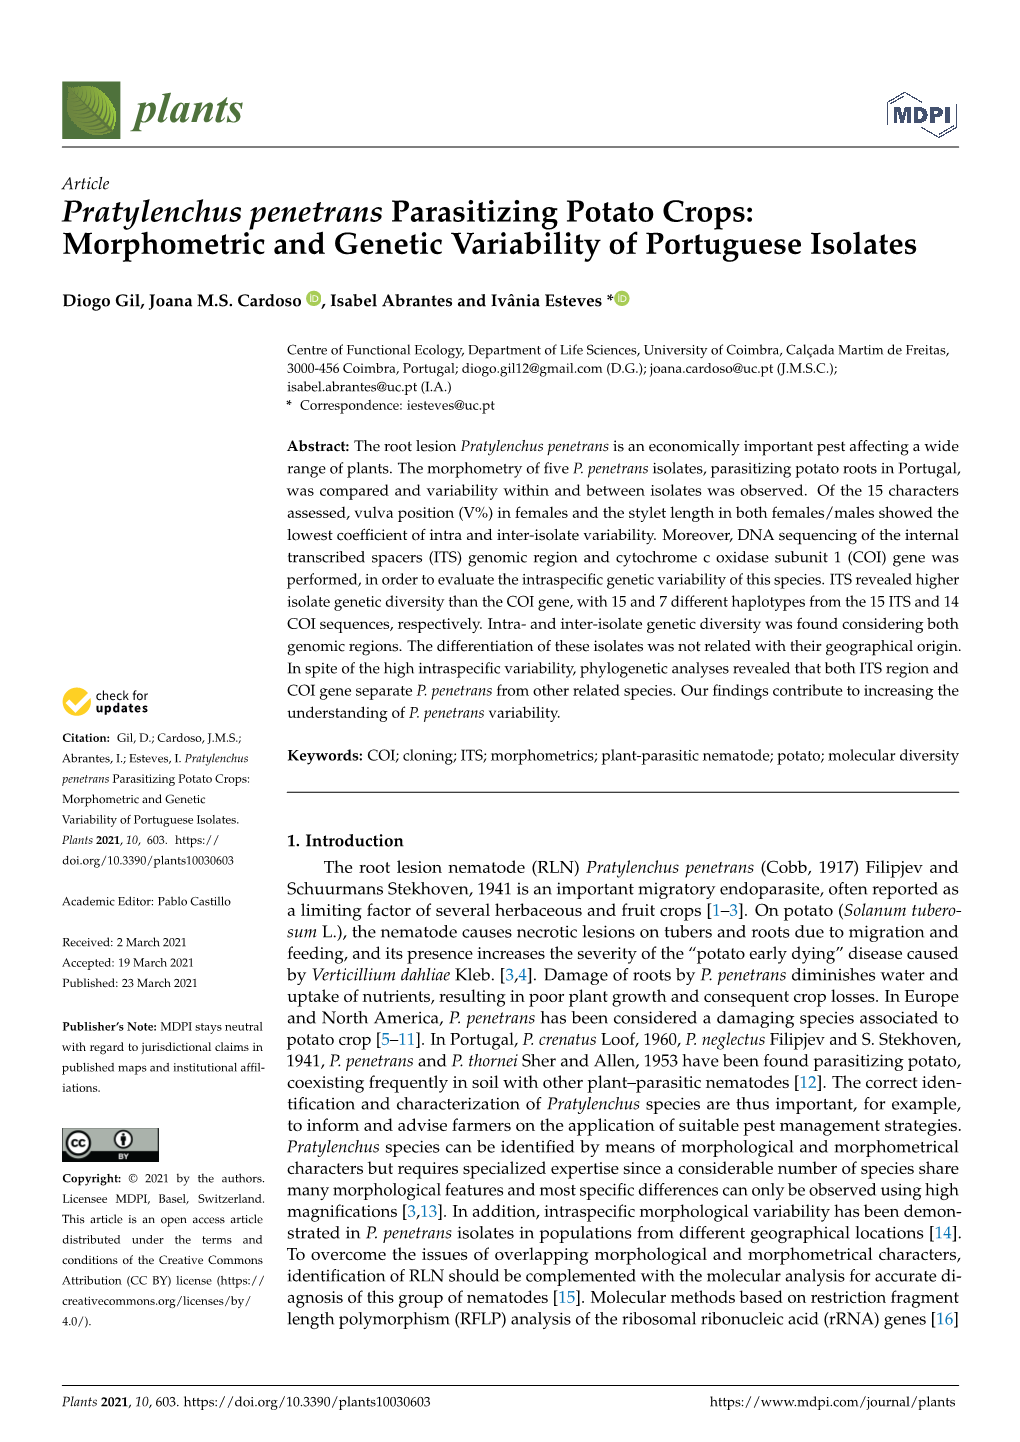 Pratylenchus Penetrans Parasitizing Potato Crops: Morphometric and Genetic Variability of Portuguese Isolates